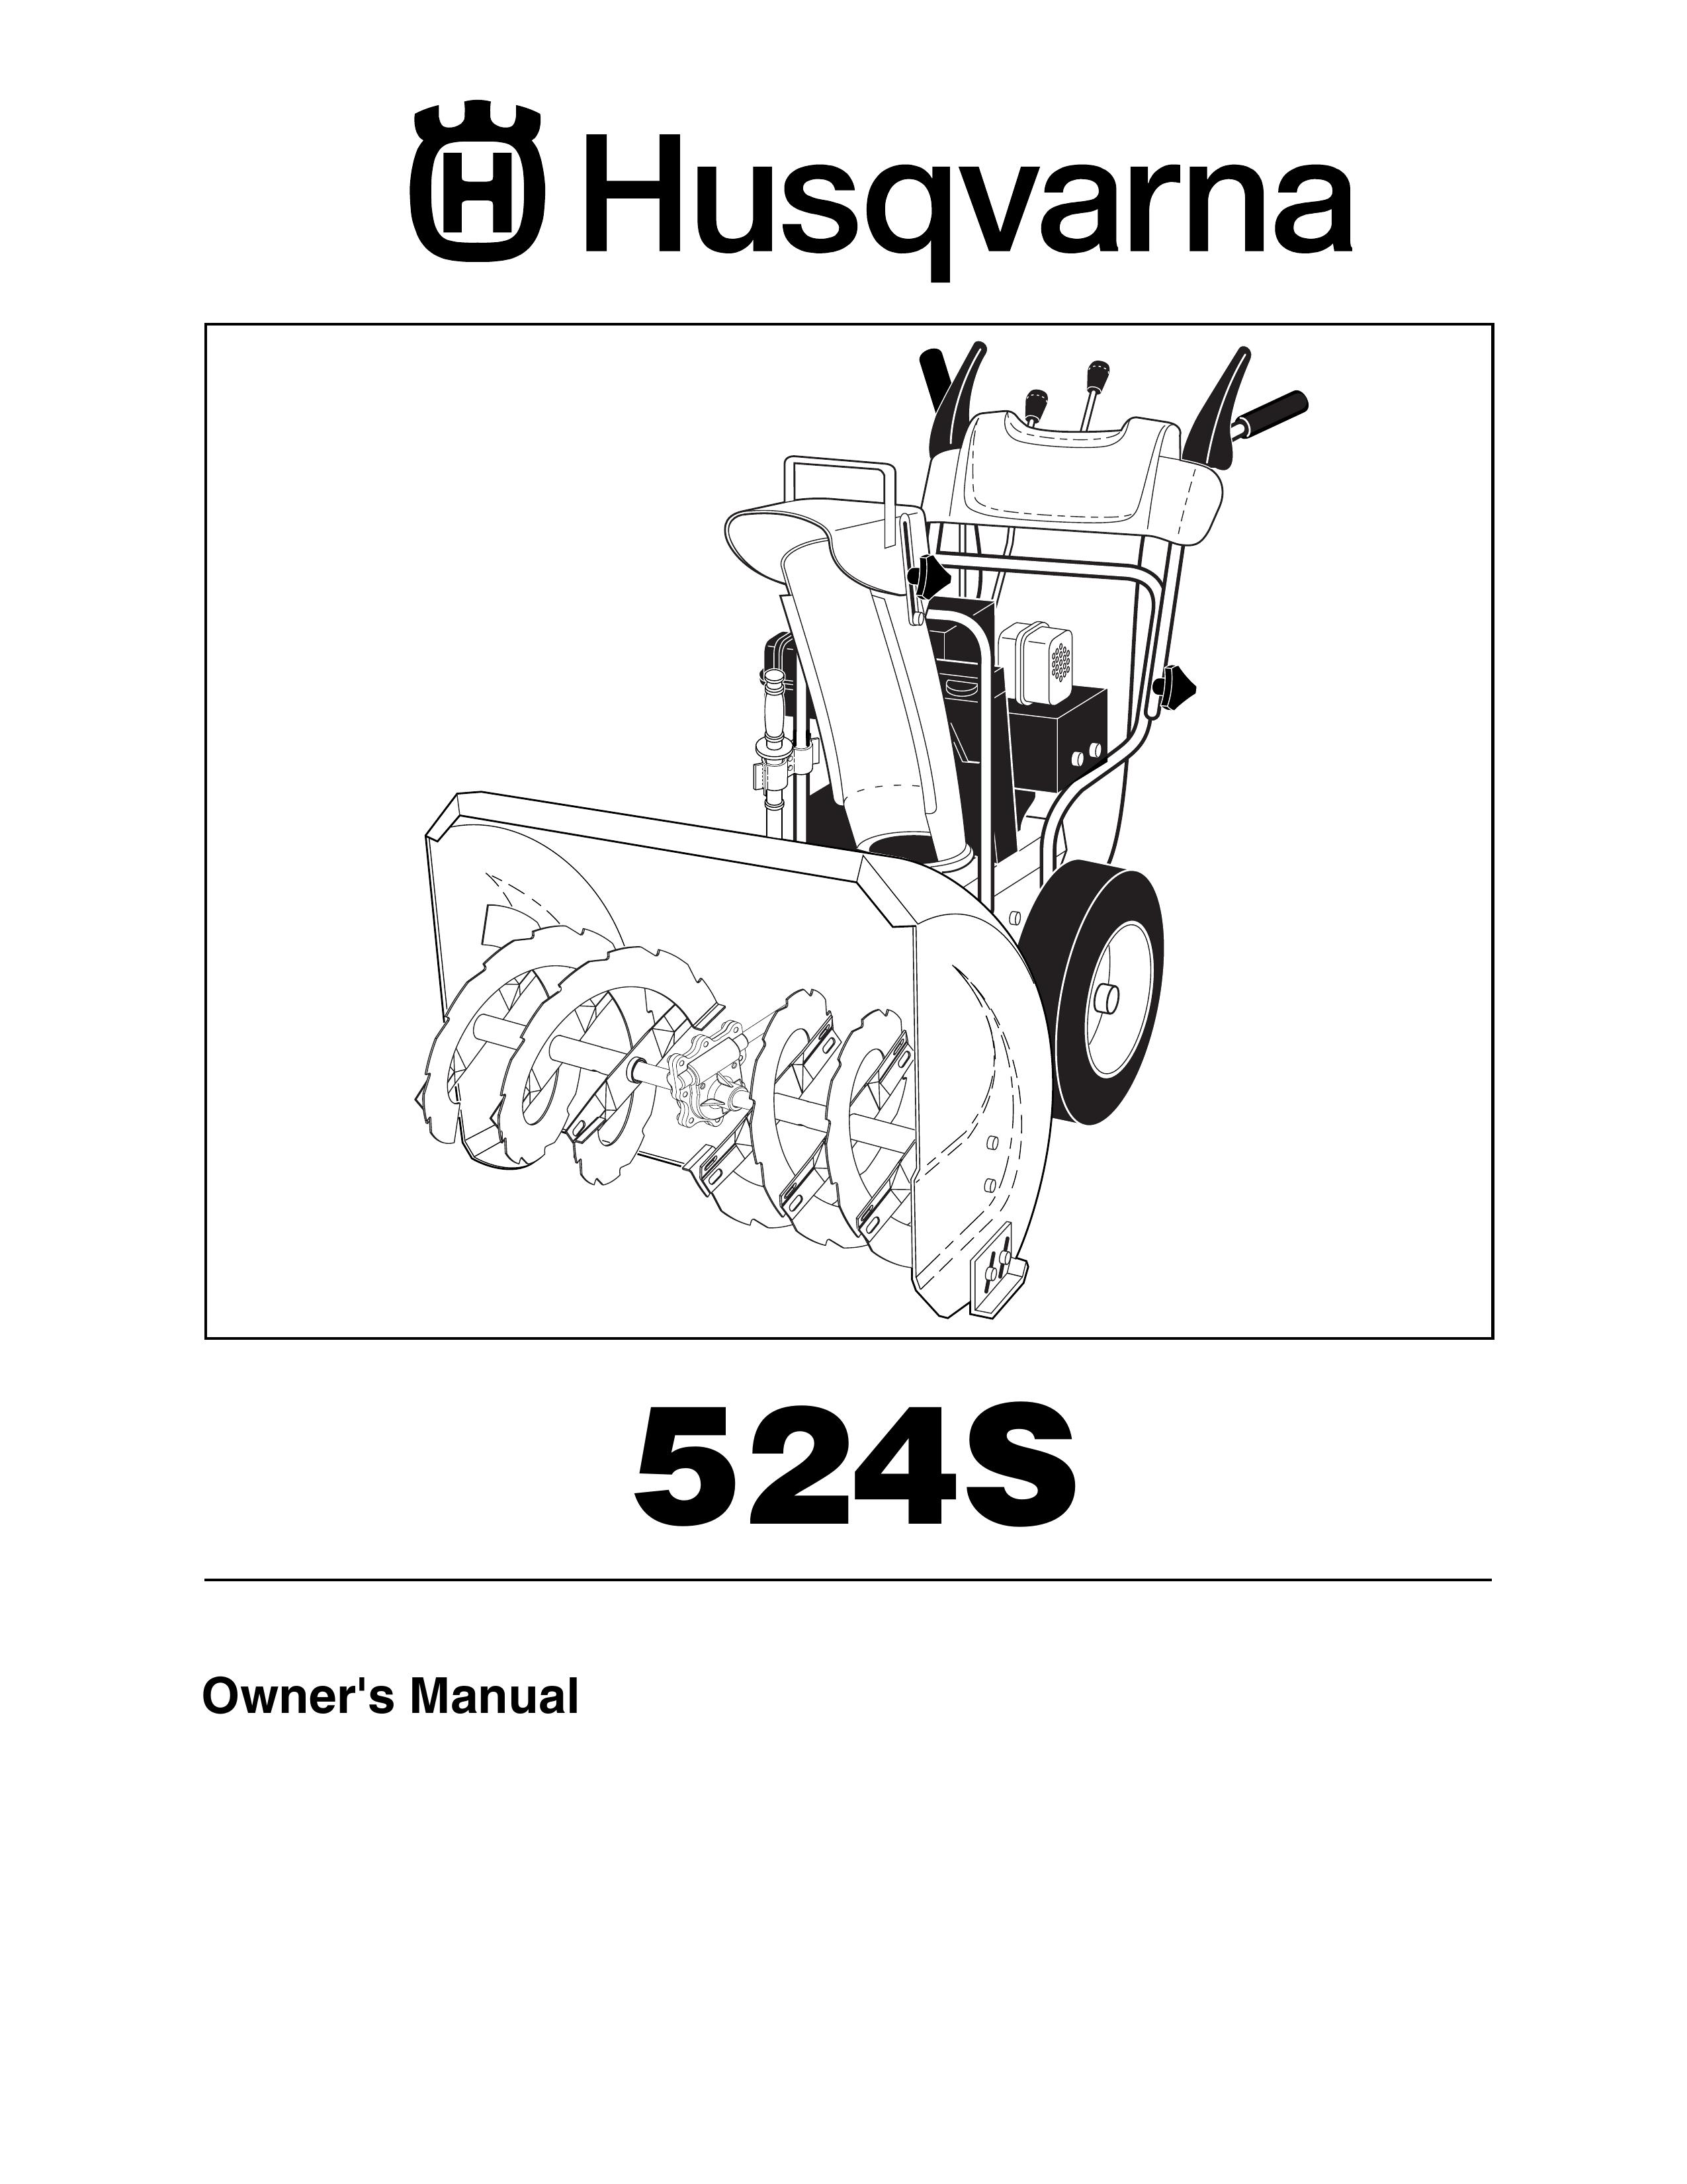 Husqvarna 524S Snow Blower User Manual